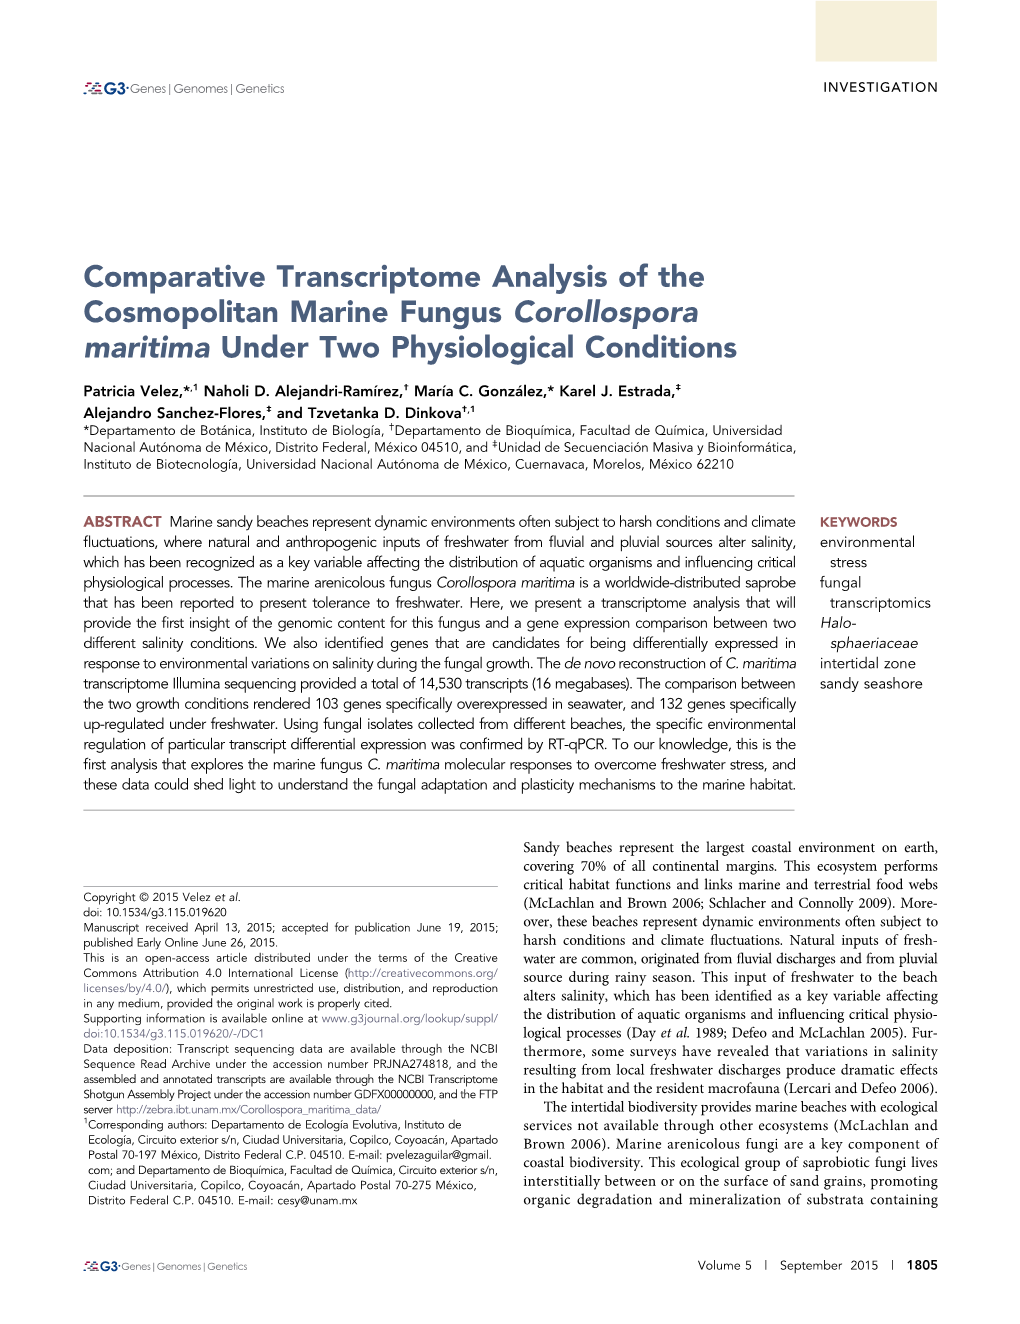 Comparative Transcriptome Analysis of the Cosmopolitan Marine Fungus Corollospora Maritima Under Two Physiological Conditions